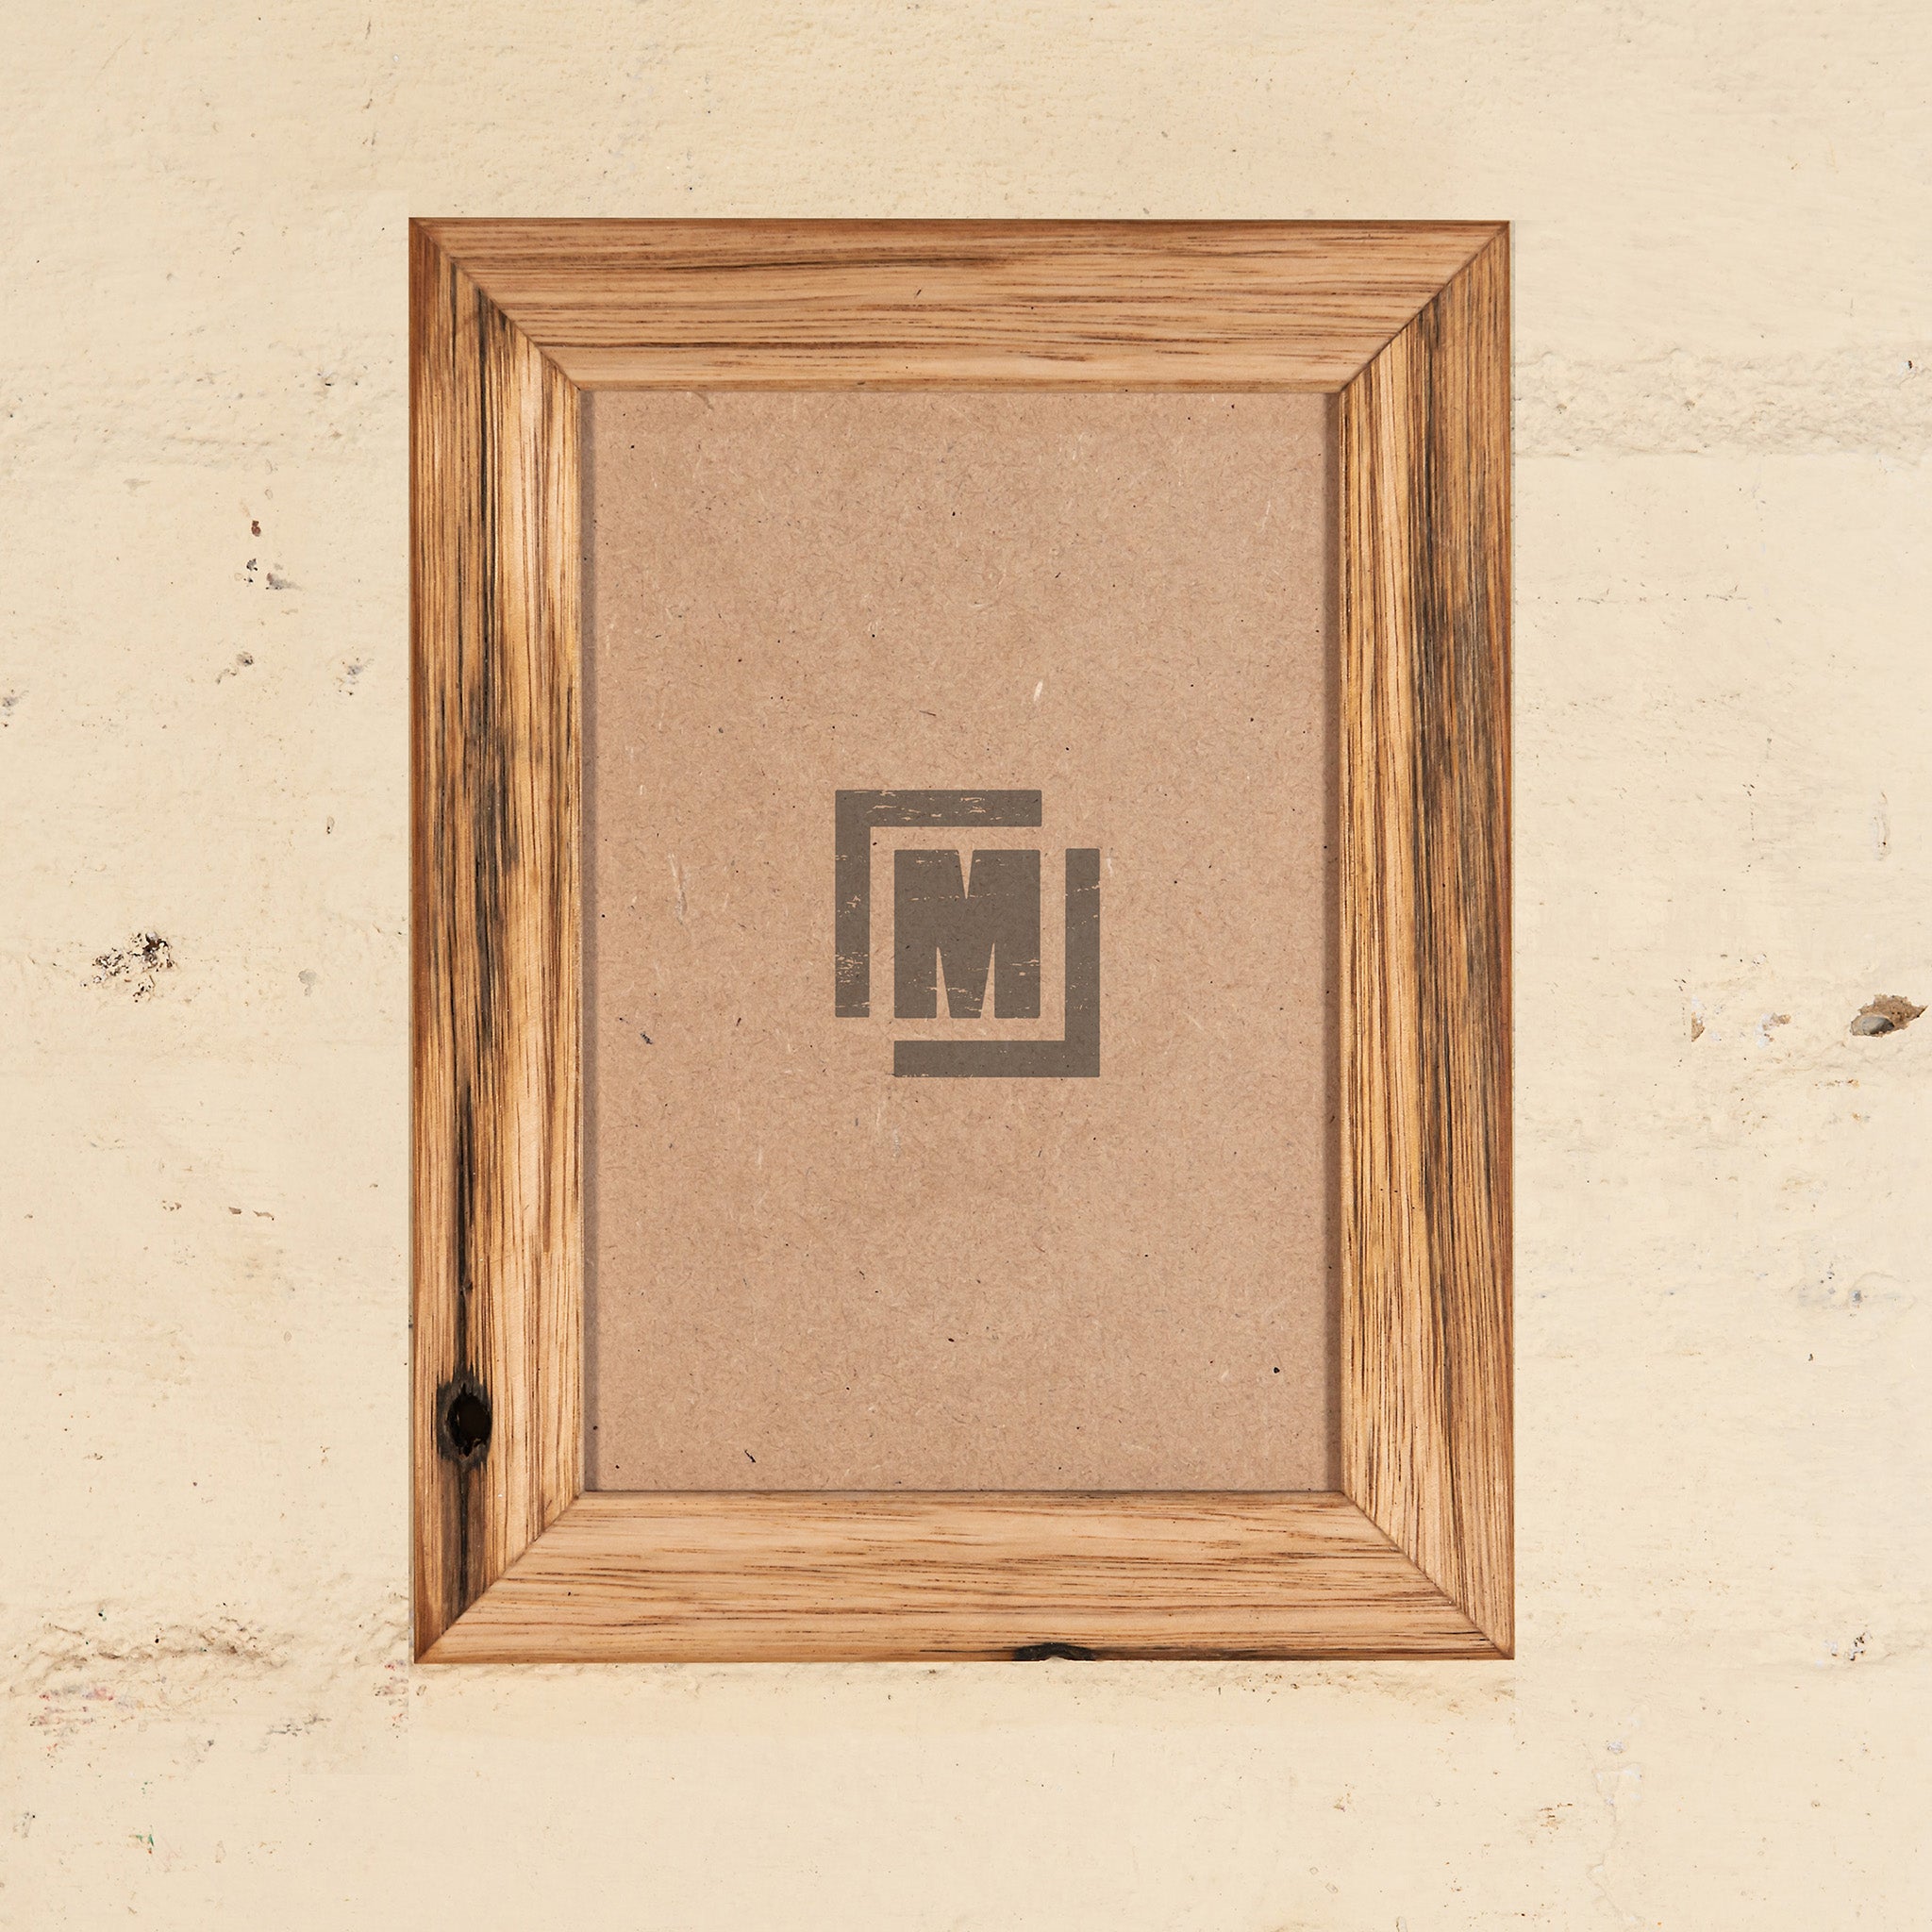 7" x 5", thin, small narrow wood photo frame, made form sustainable hardwood in Australia